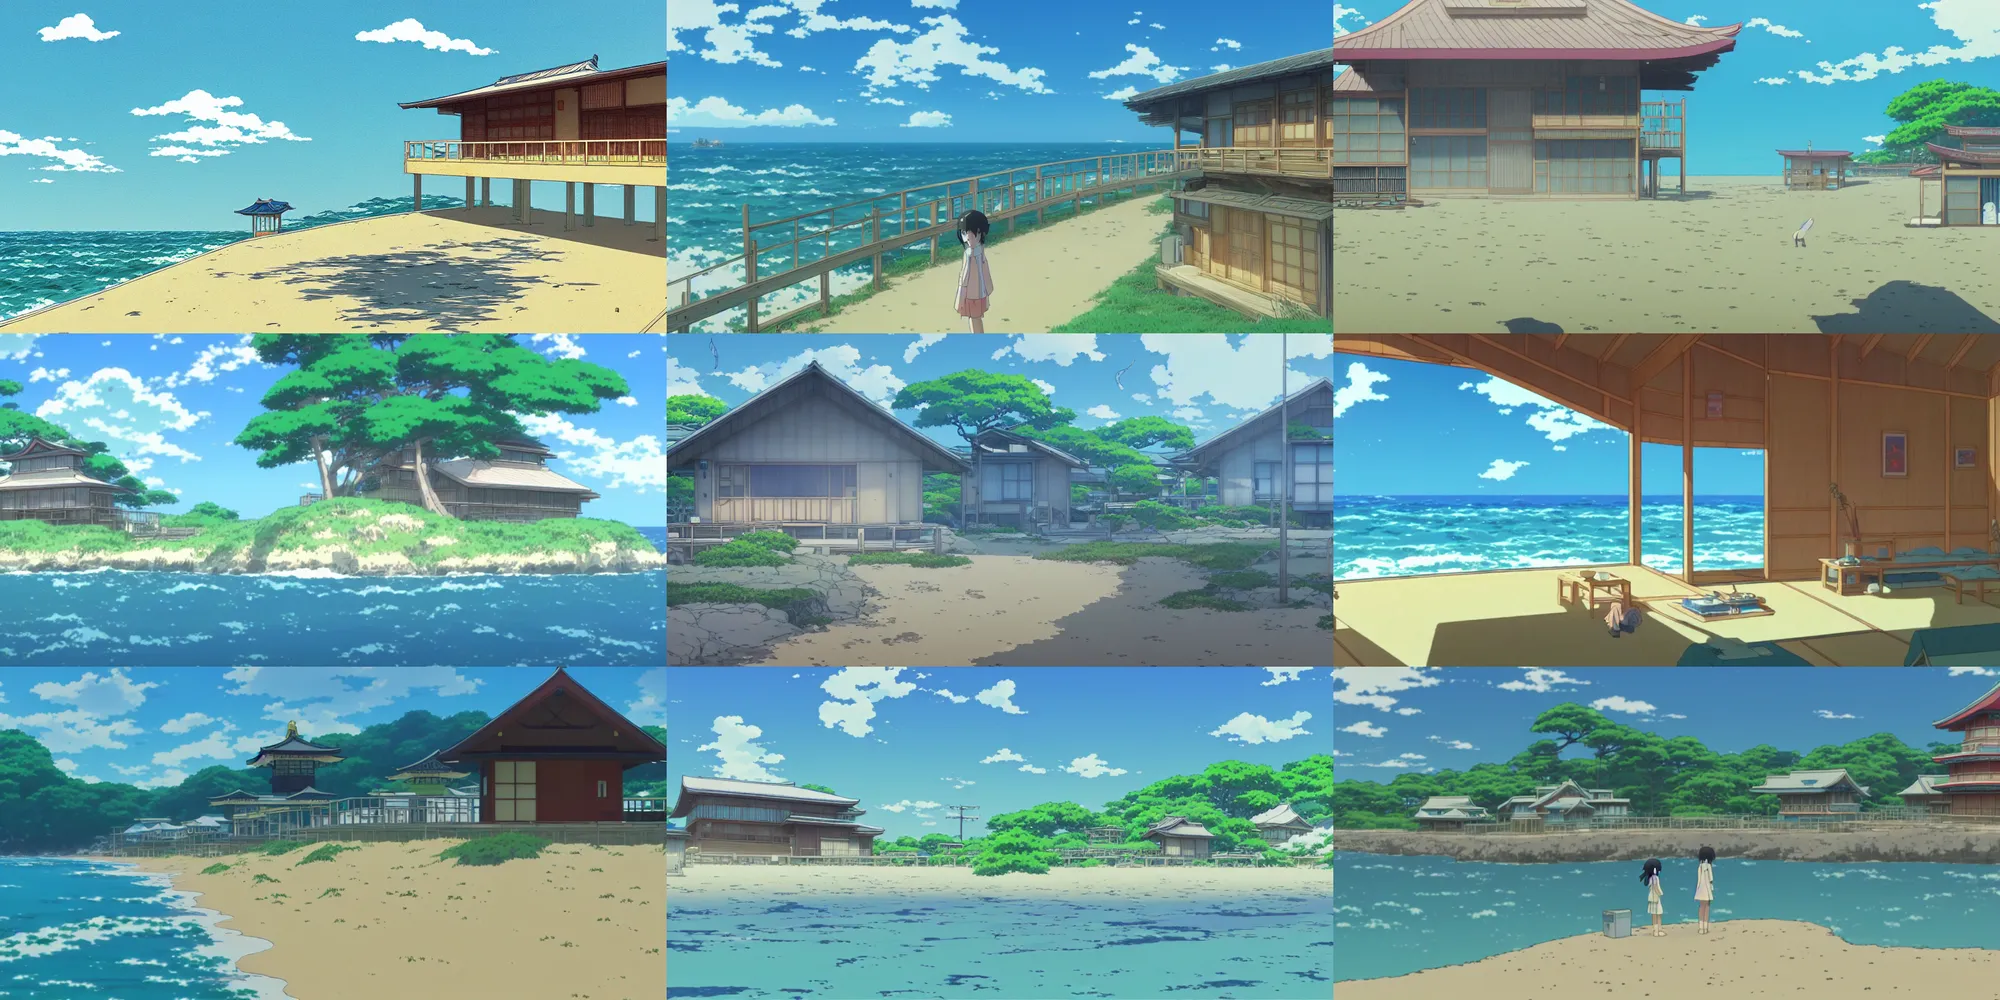 Prompt: a japanese beach house near the ocean, screenshot from the anime film by Makoto Shinkai and studio ghibli